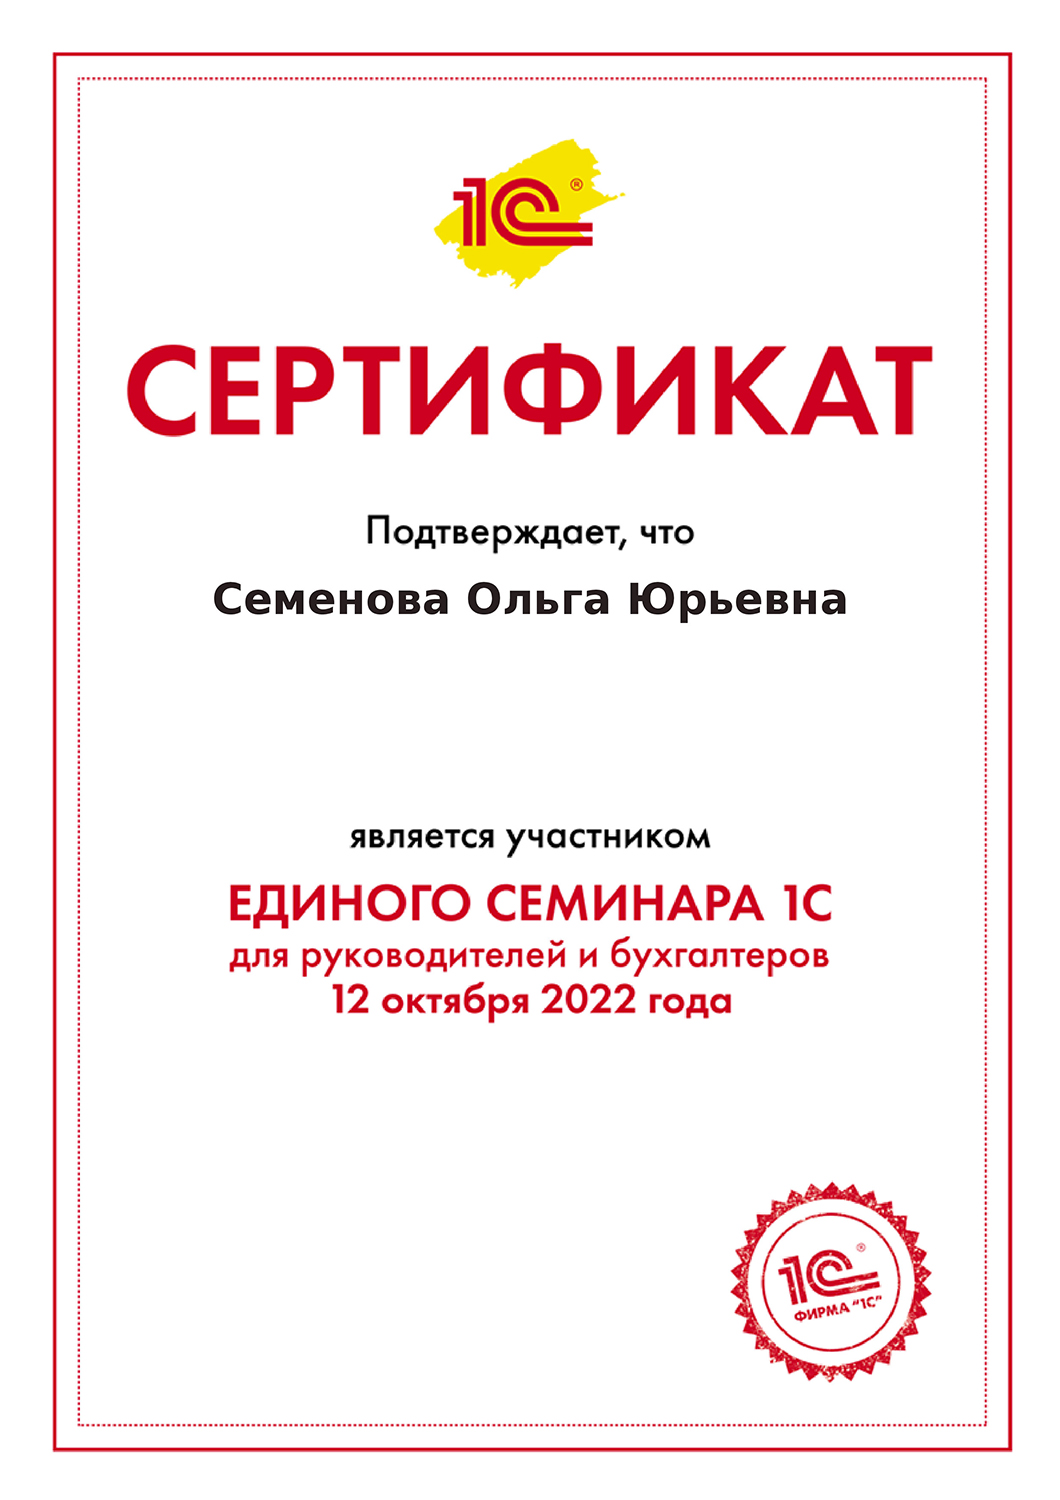 Сертификат 12.10.2022